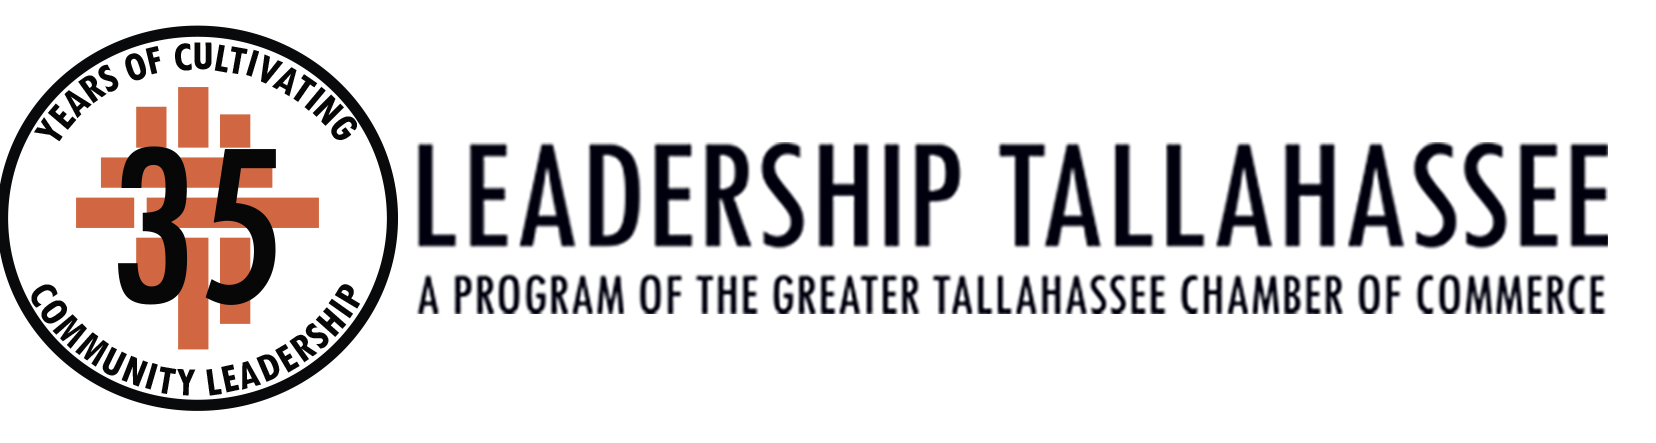 35 years of Leadership Tallahassee Logo